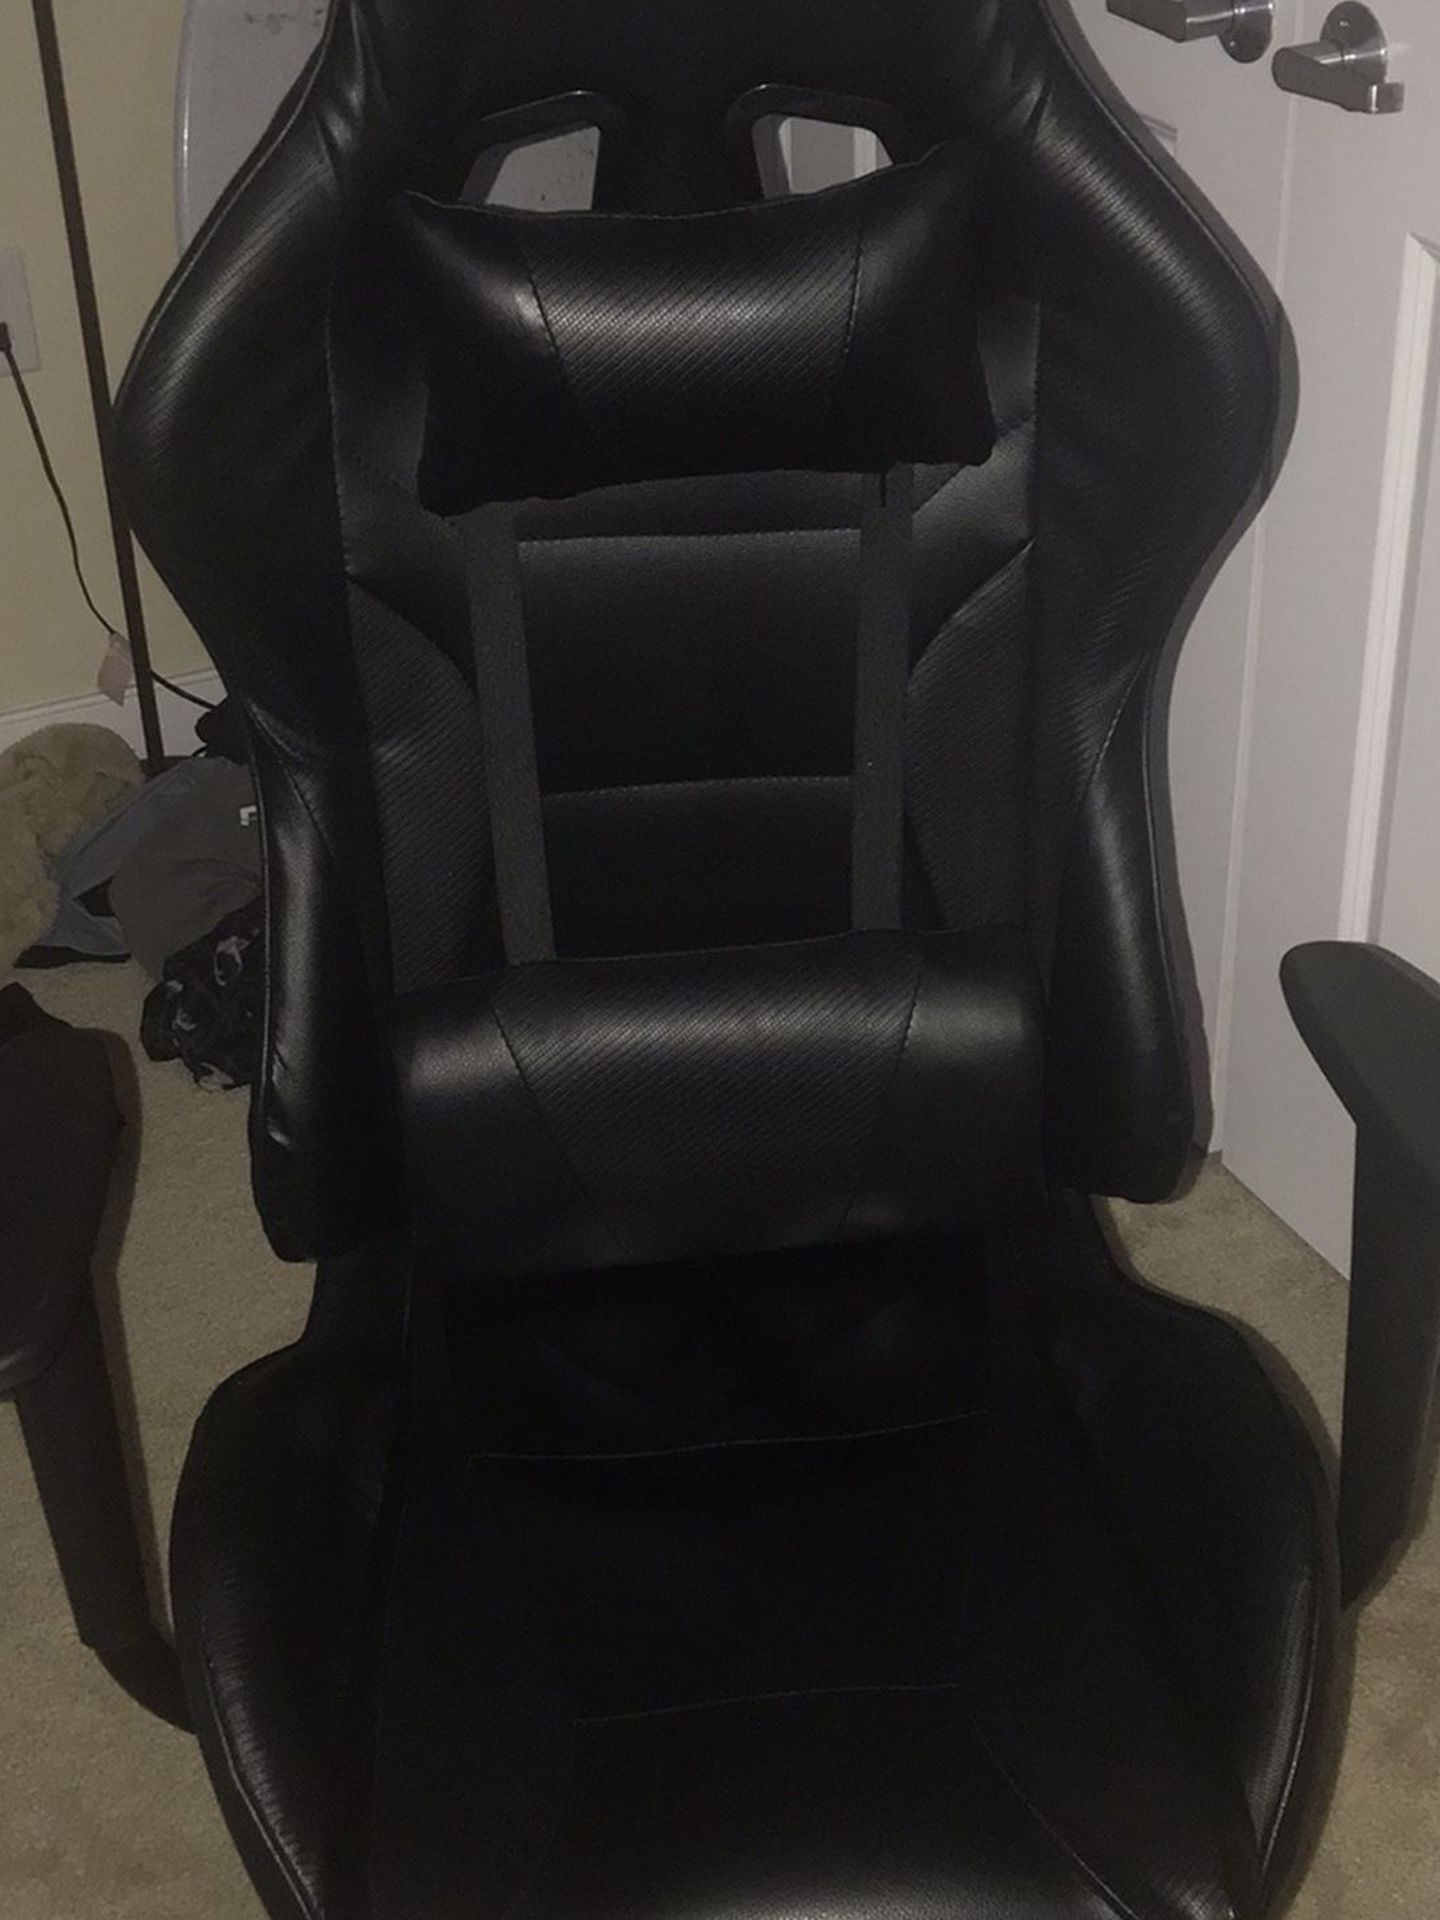 Racing/Gaming Chair